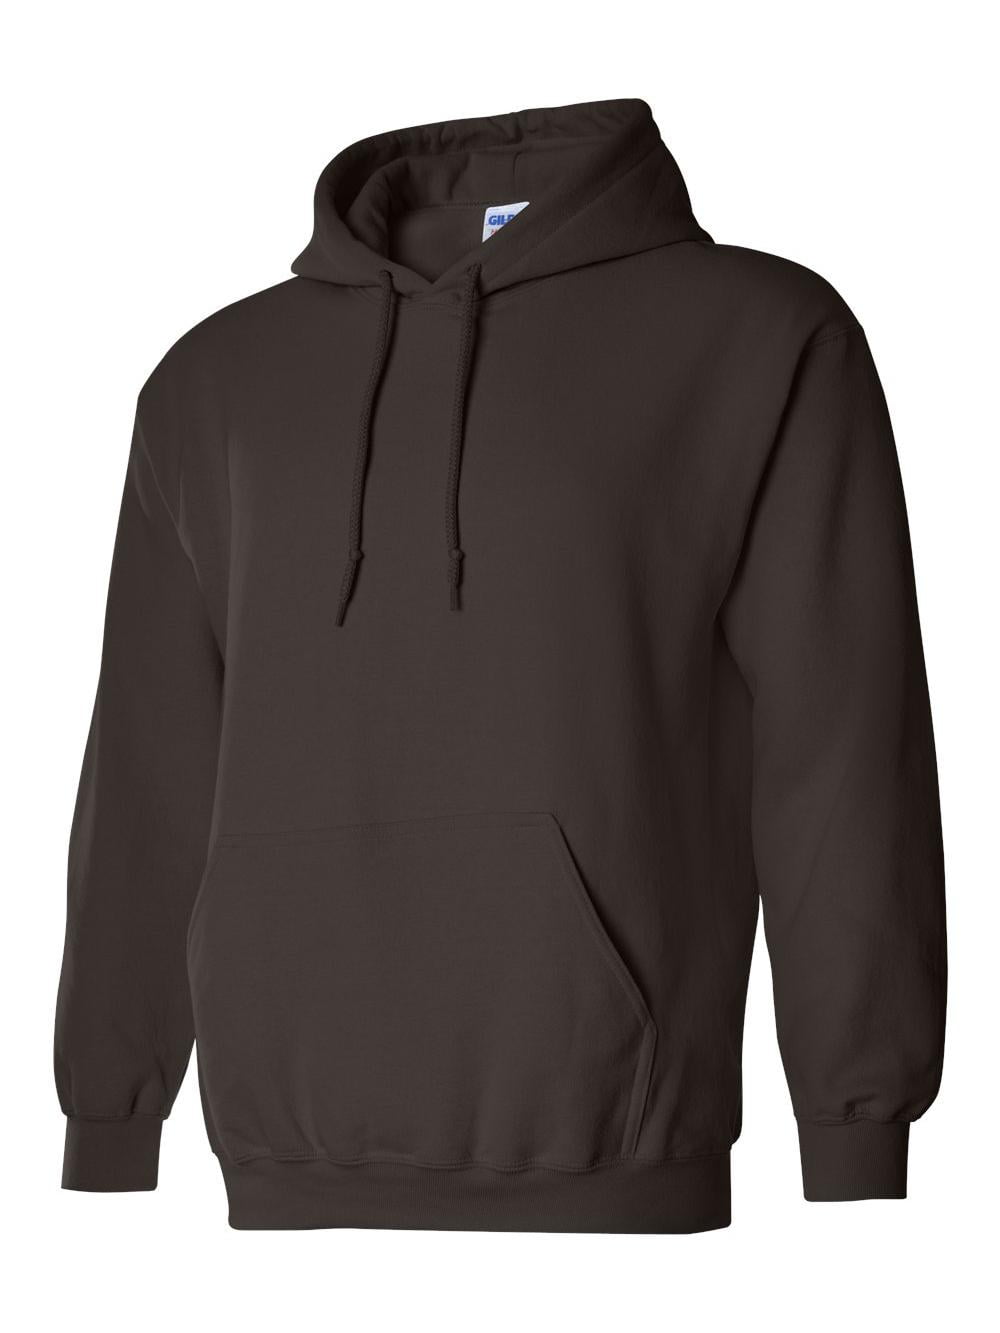 Heavy Blend Hooded Sweatshirt - 18500 - Walmart.com